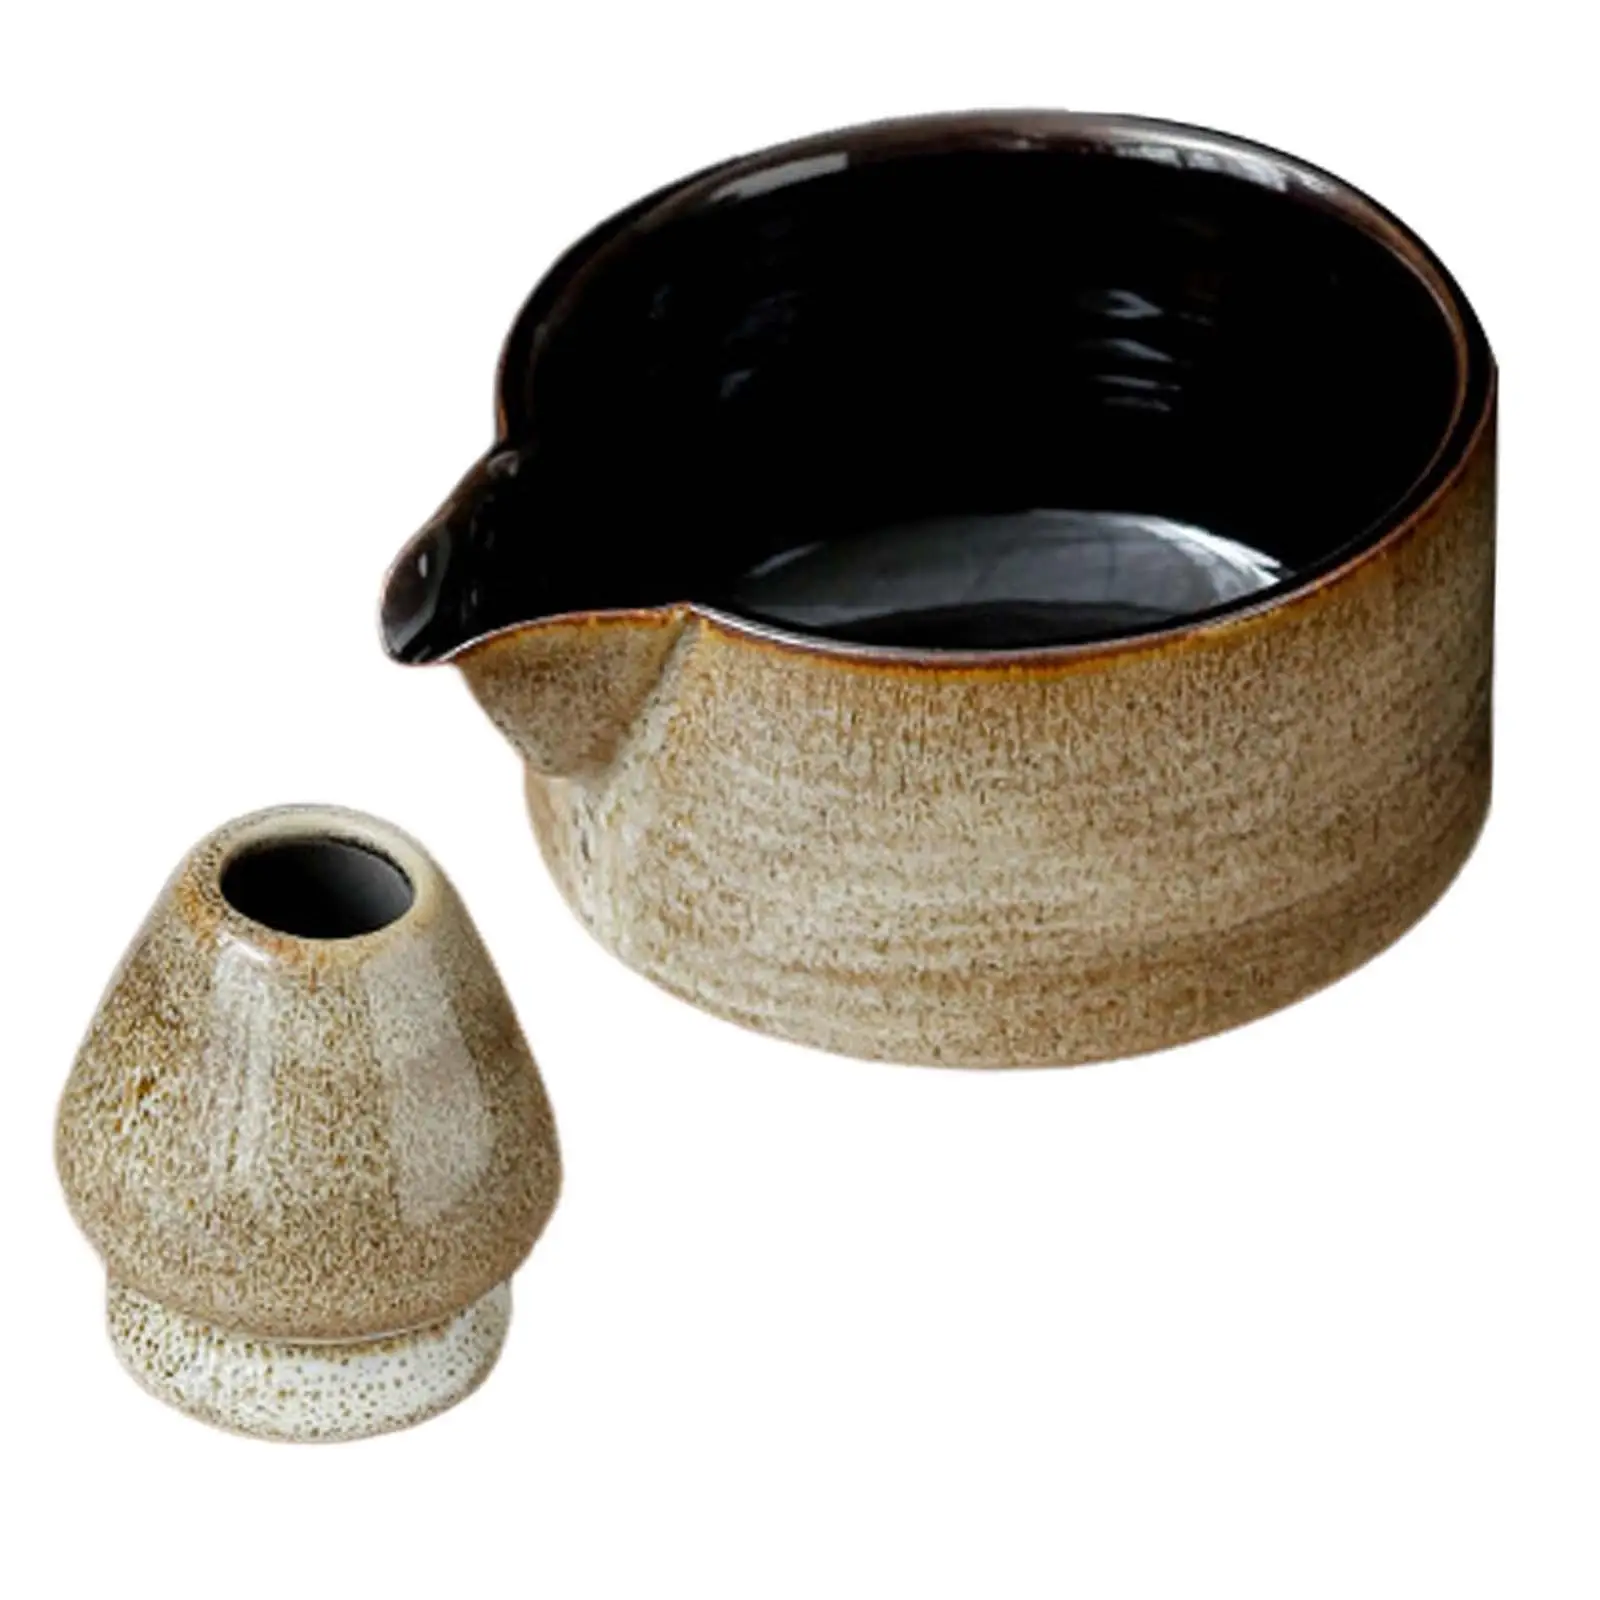 2Pcs Tea Bowls and Whisk Holder Best Gift Matcha Ceramic Bowl for Family Friends Tea Lovers Japanese Matcha Preparation Beverage